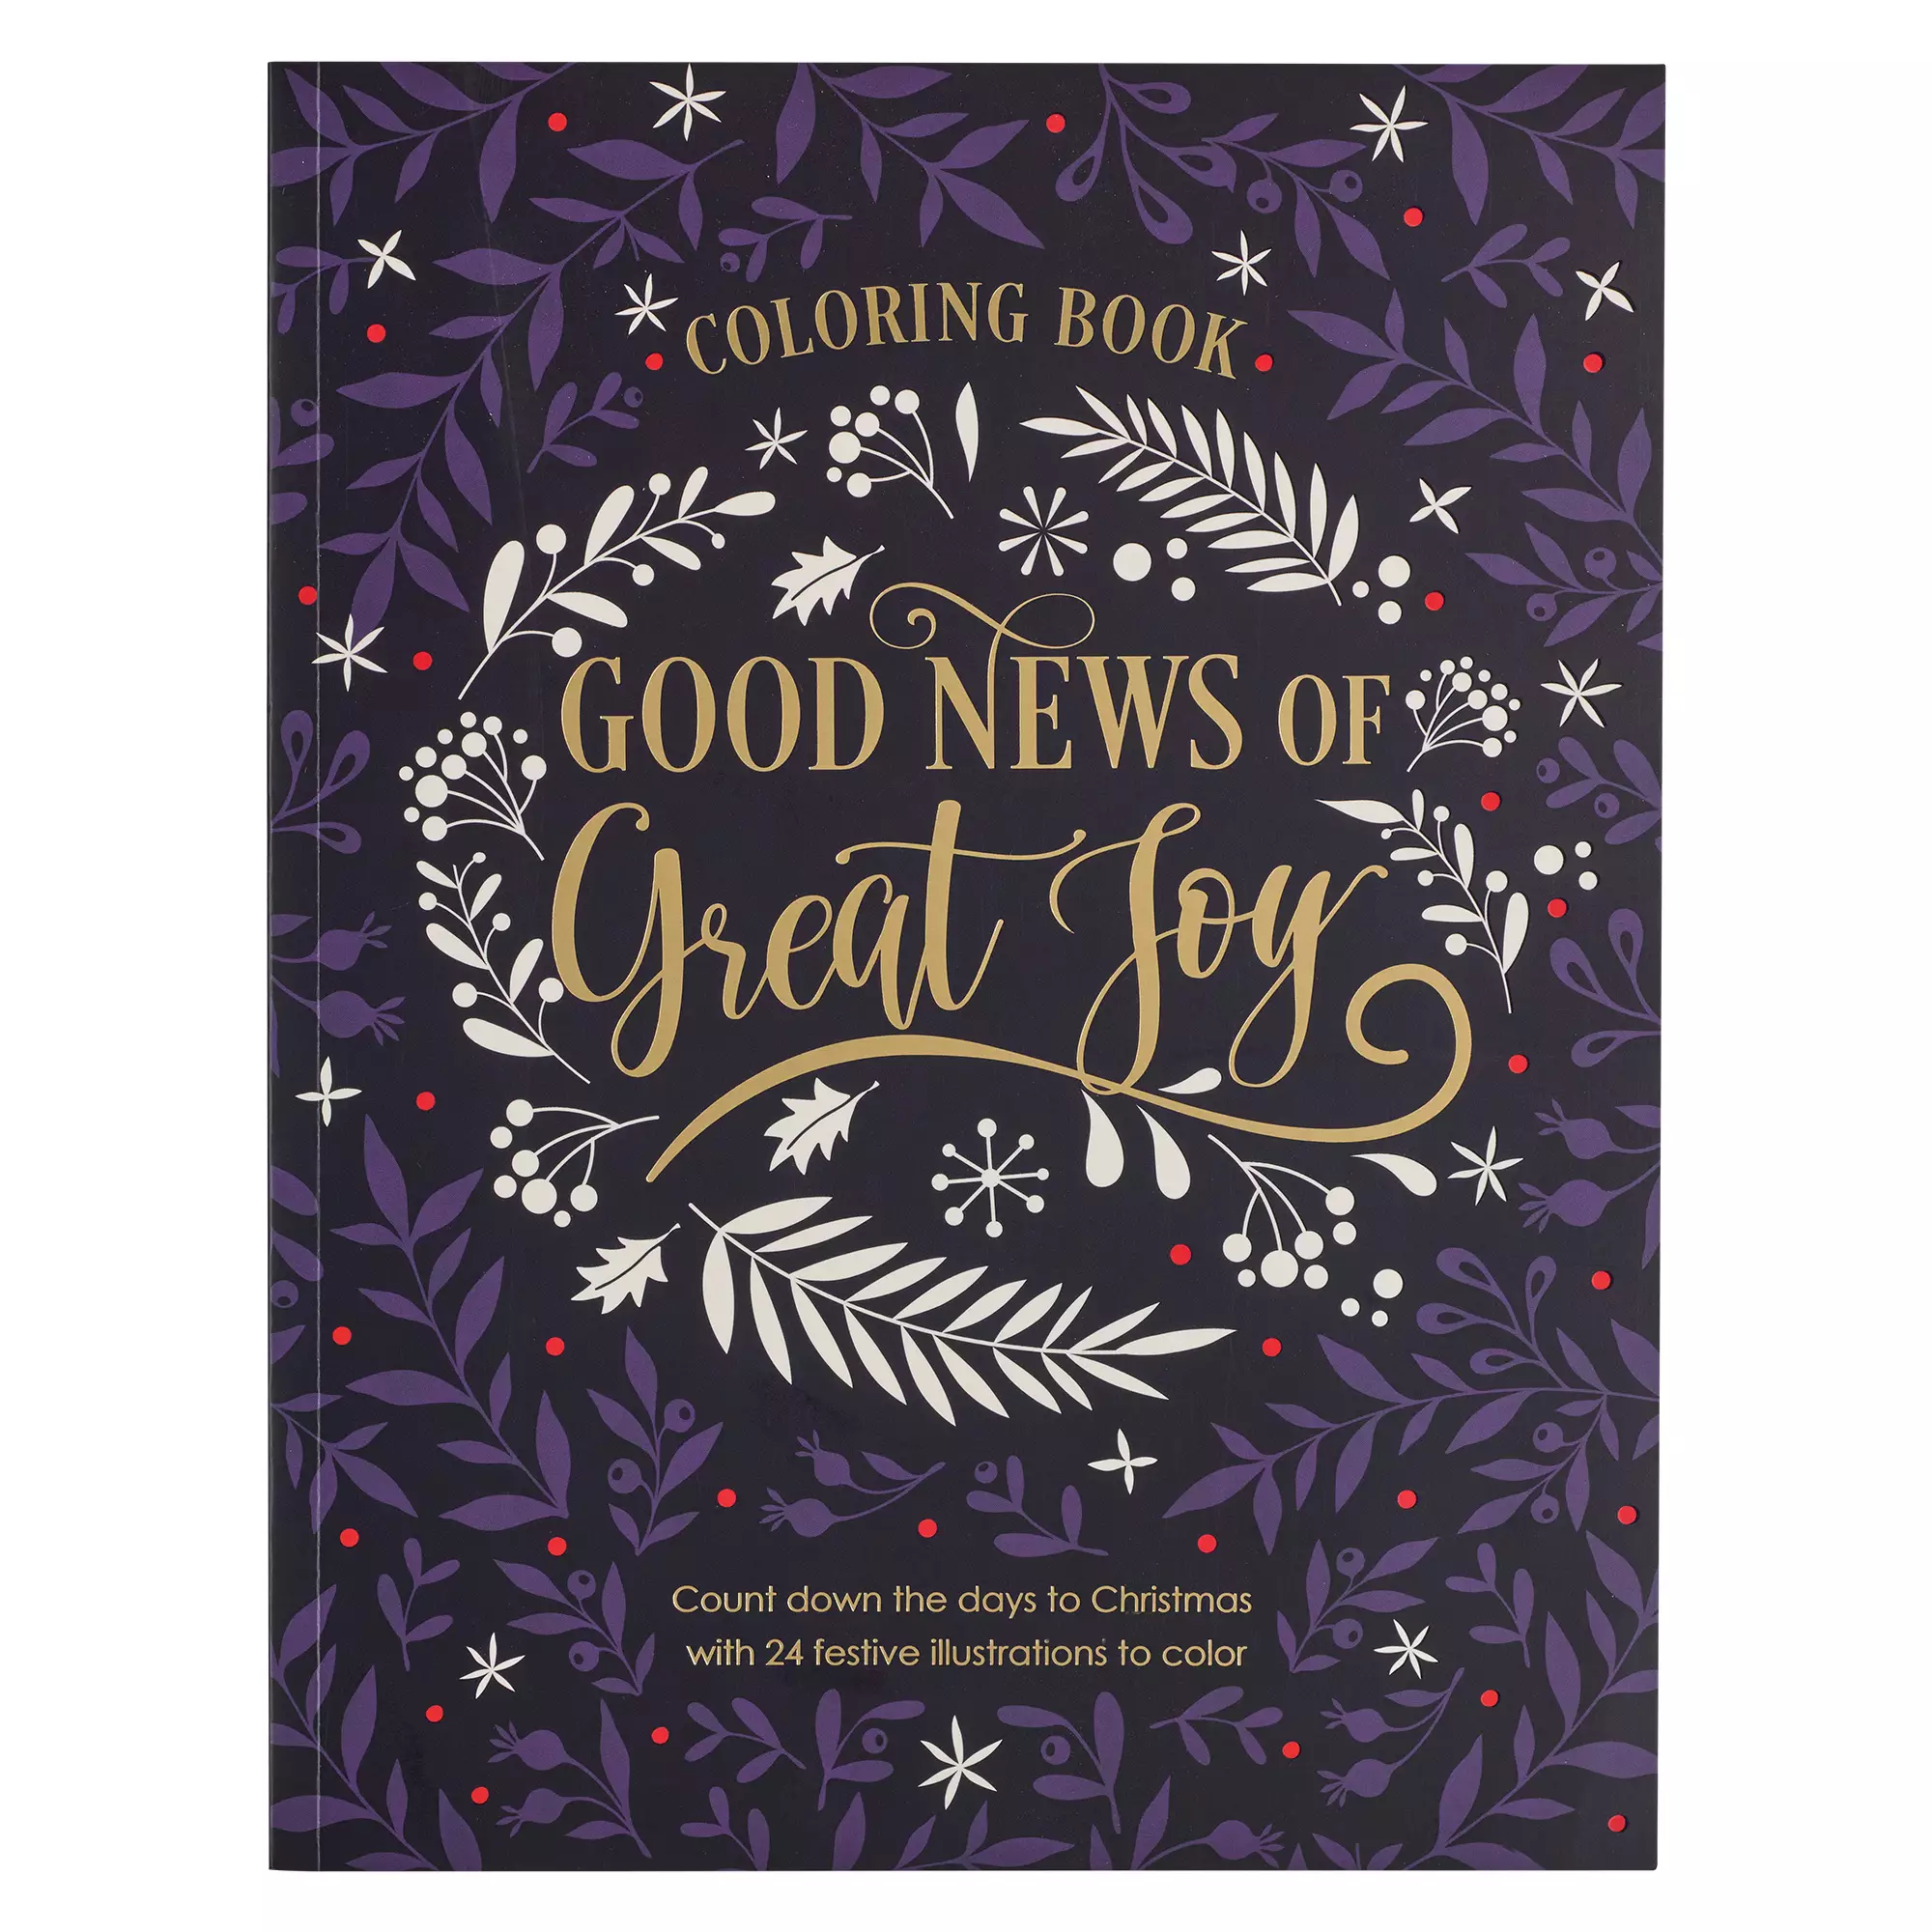 Coloring Book Good News of Great Joy